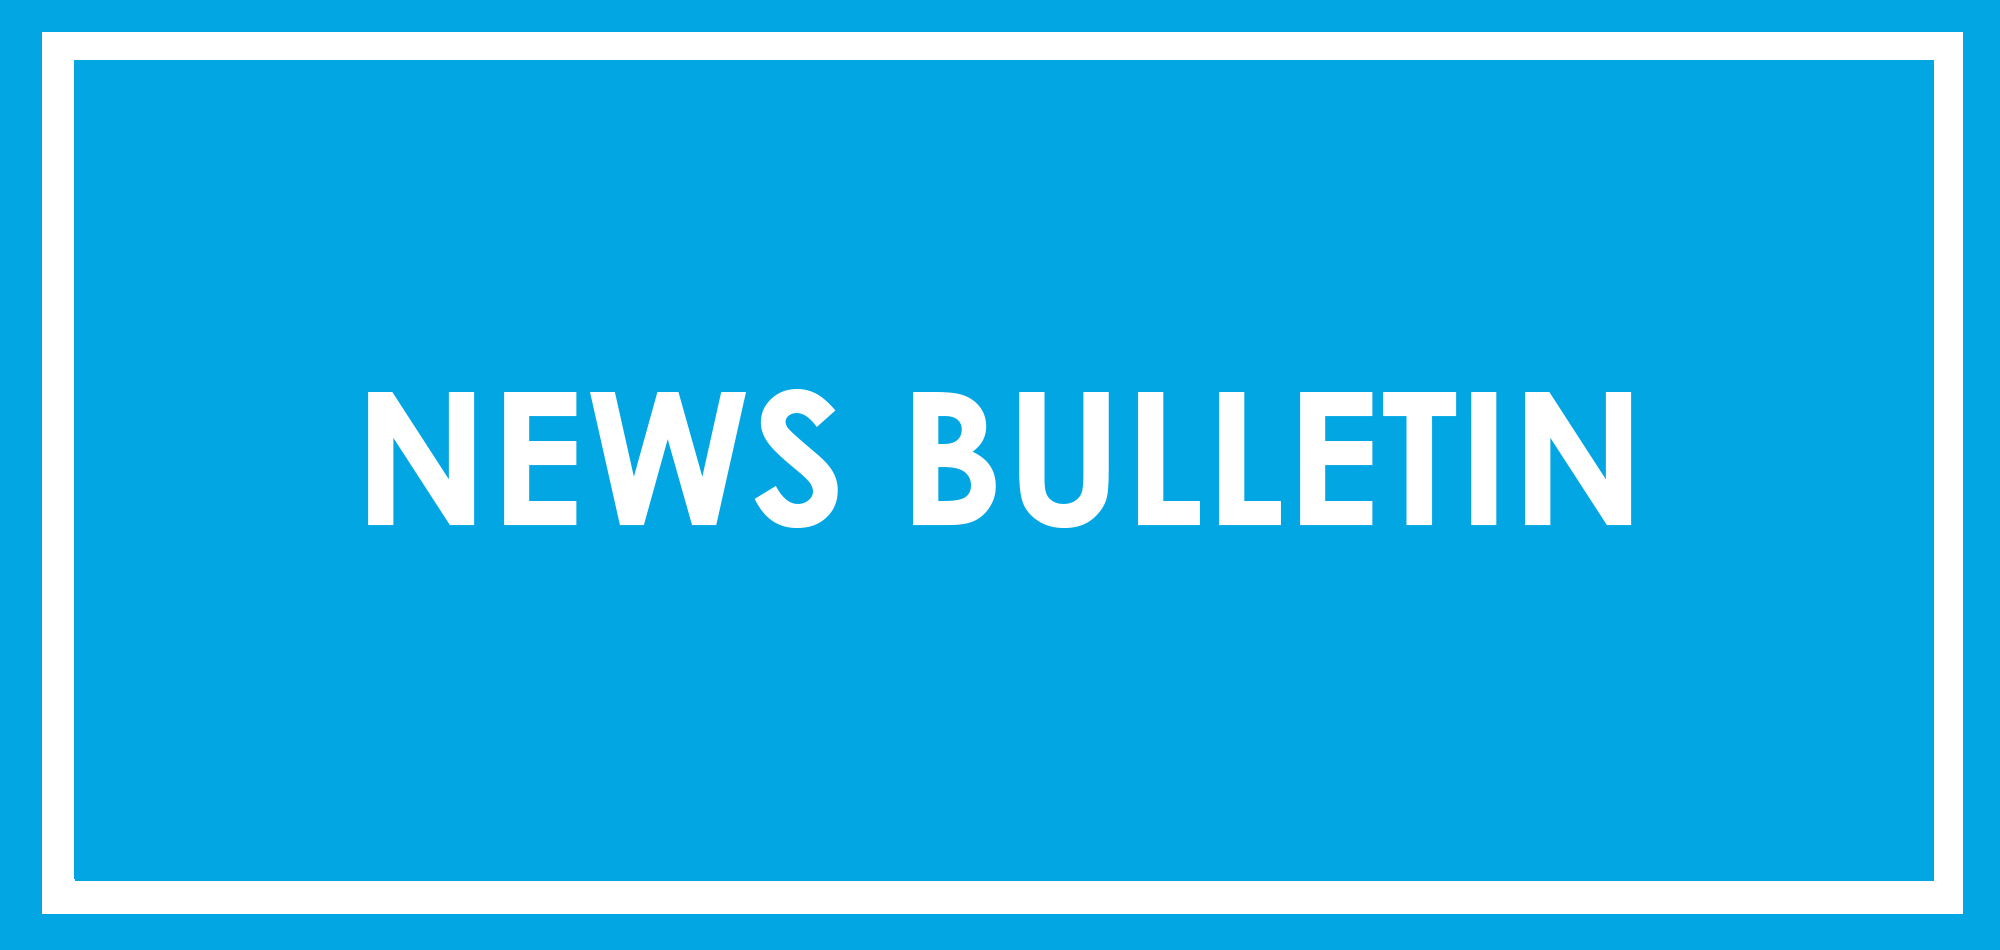 News Bulletin - 02.05.21